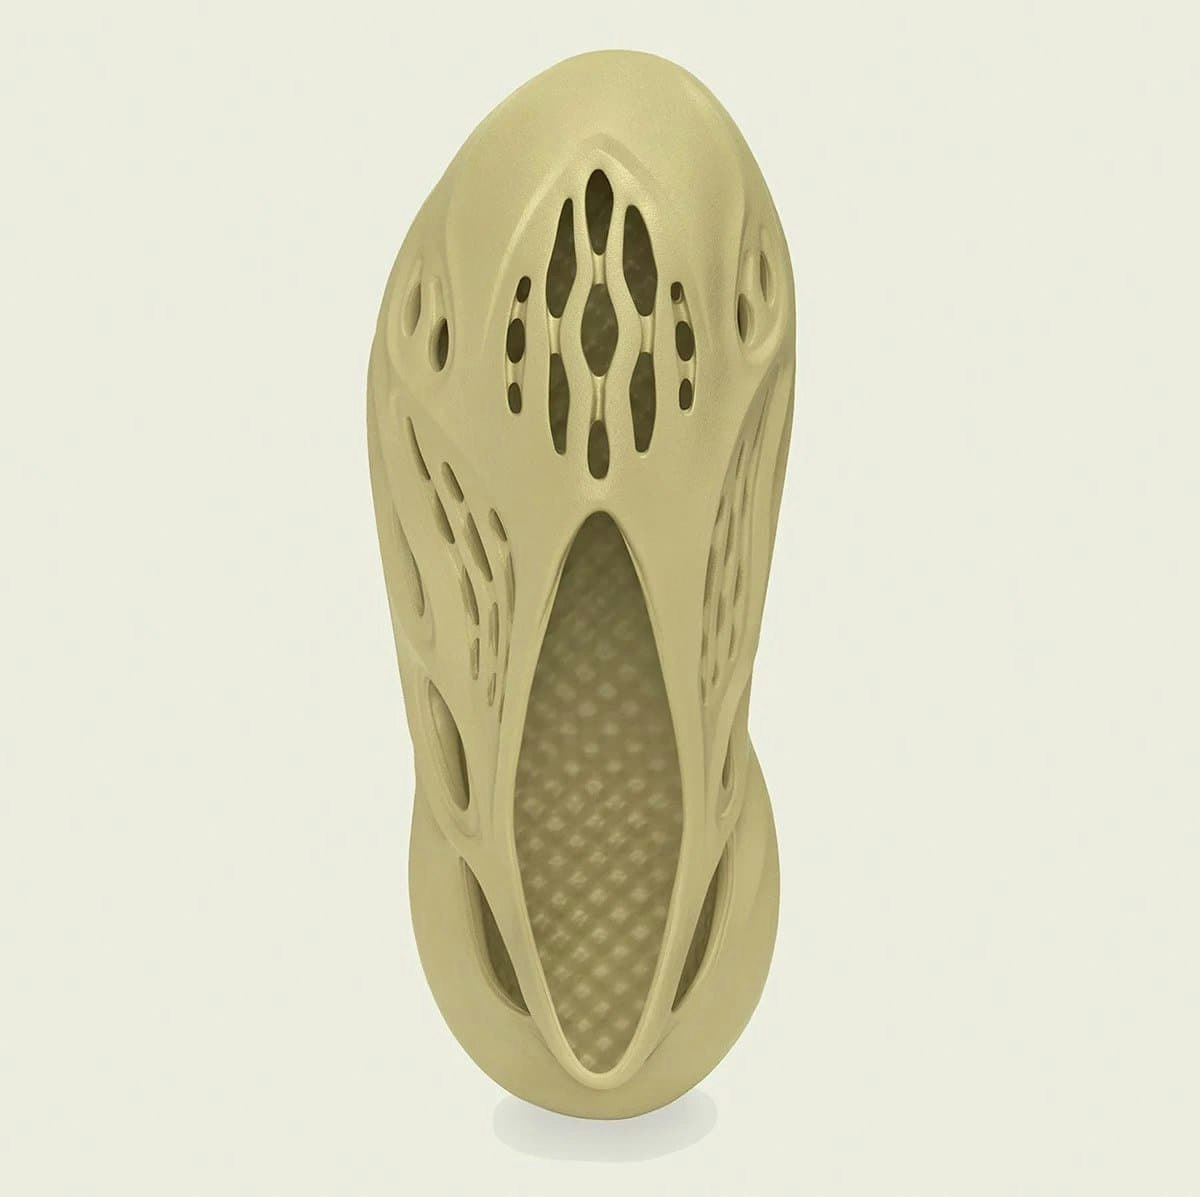 adidas Yeezy Foam Runner “Sulfur”